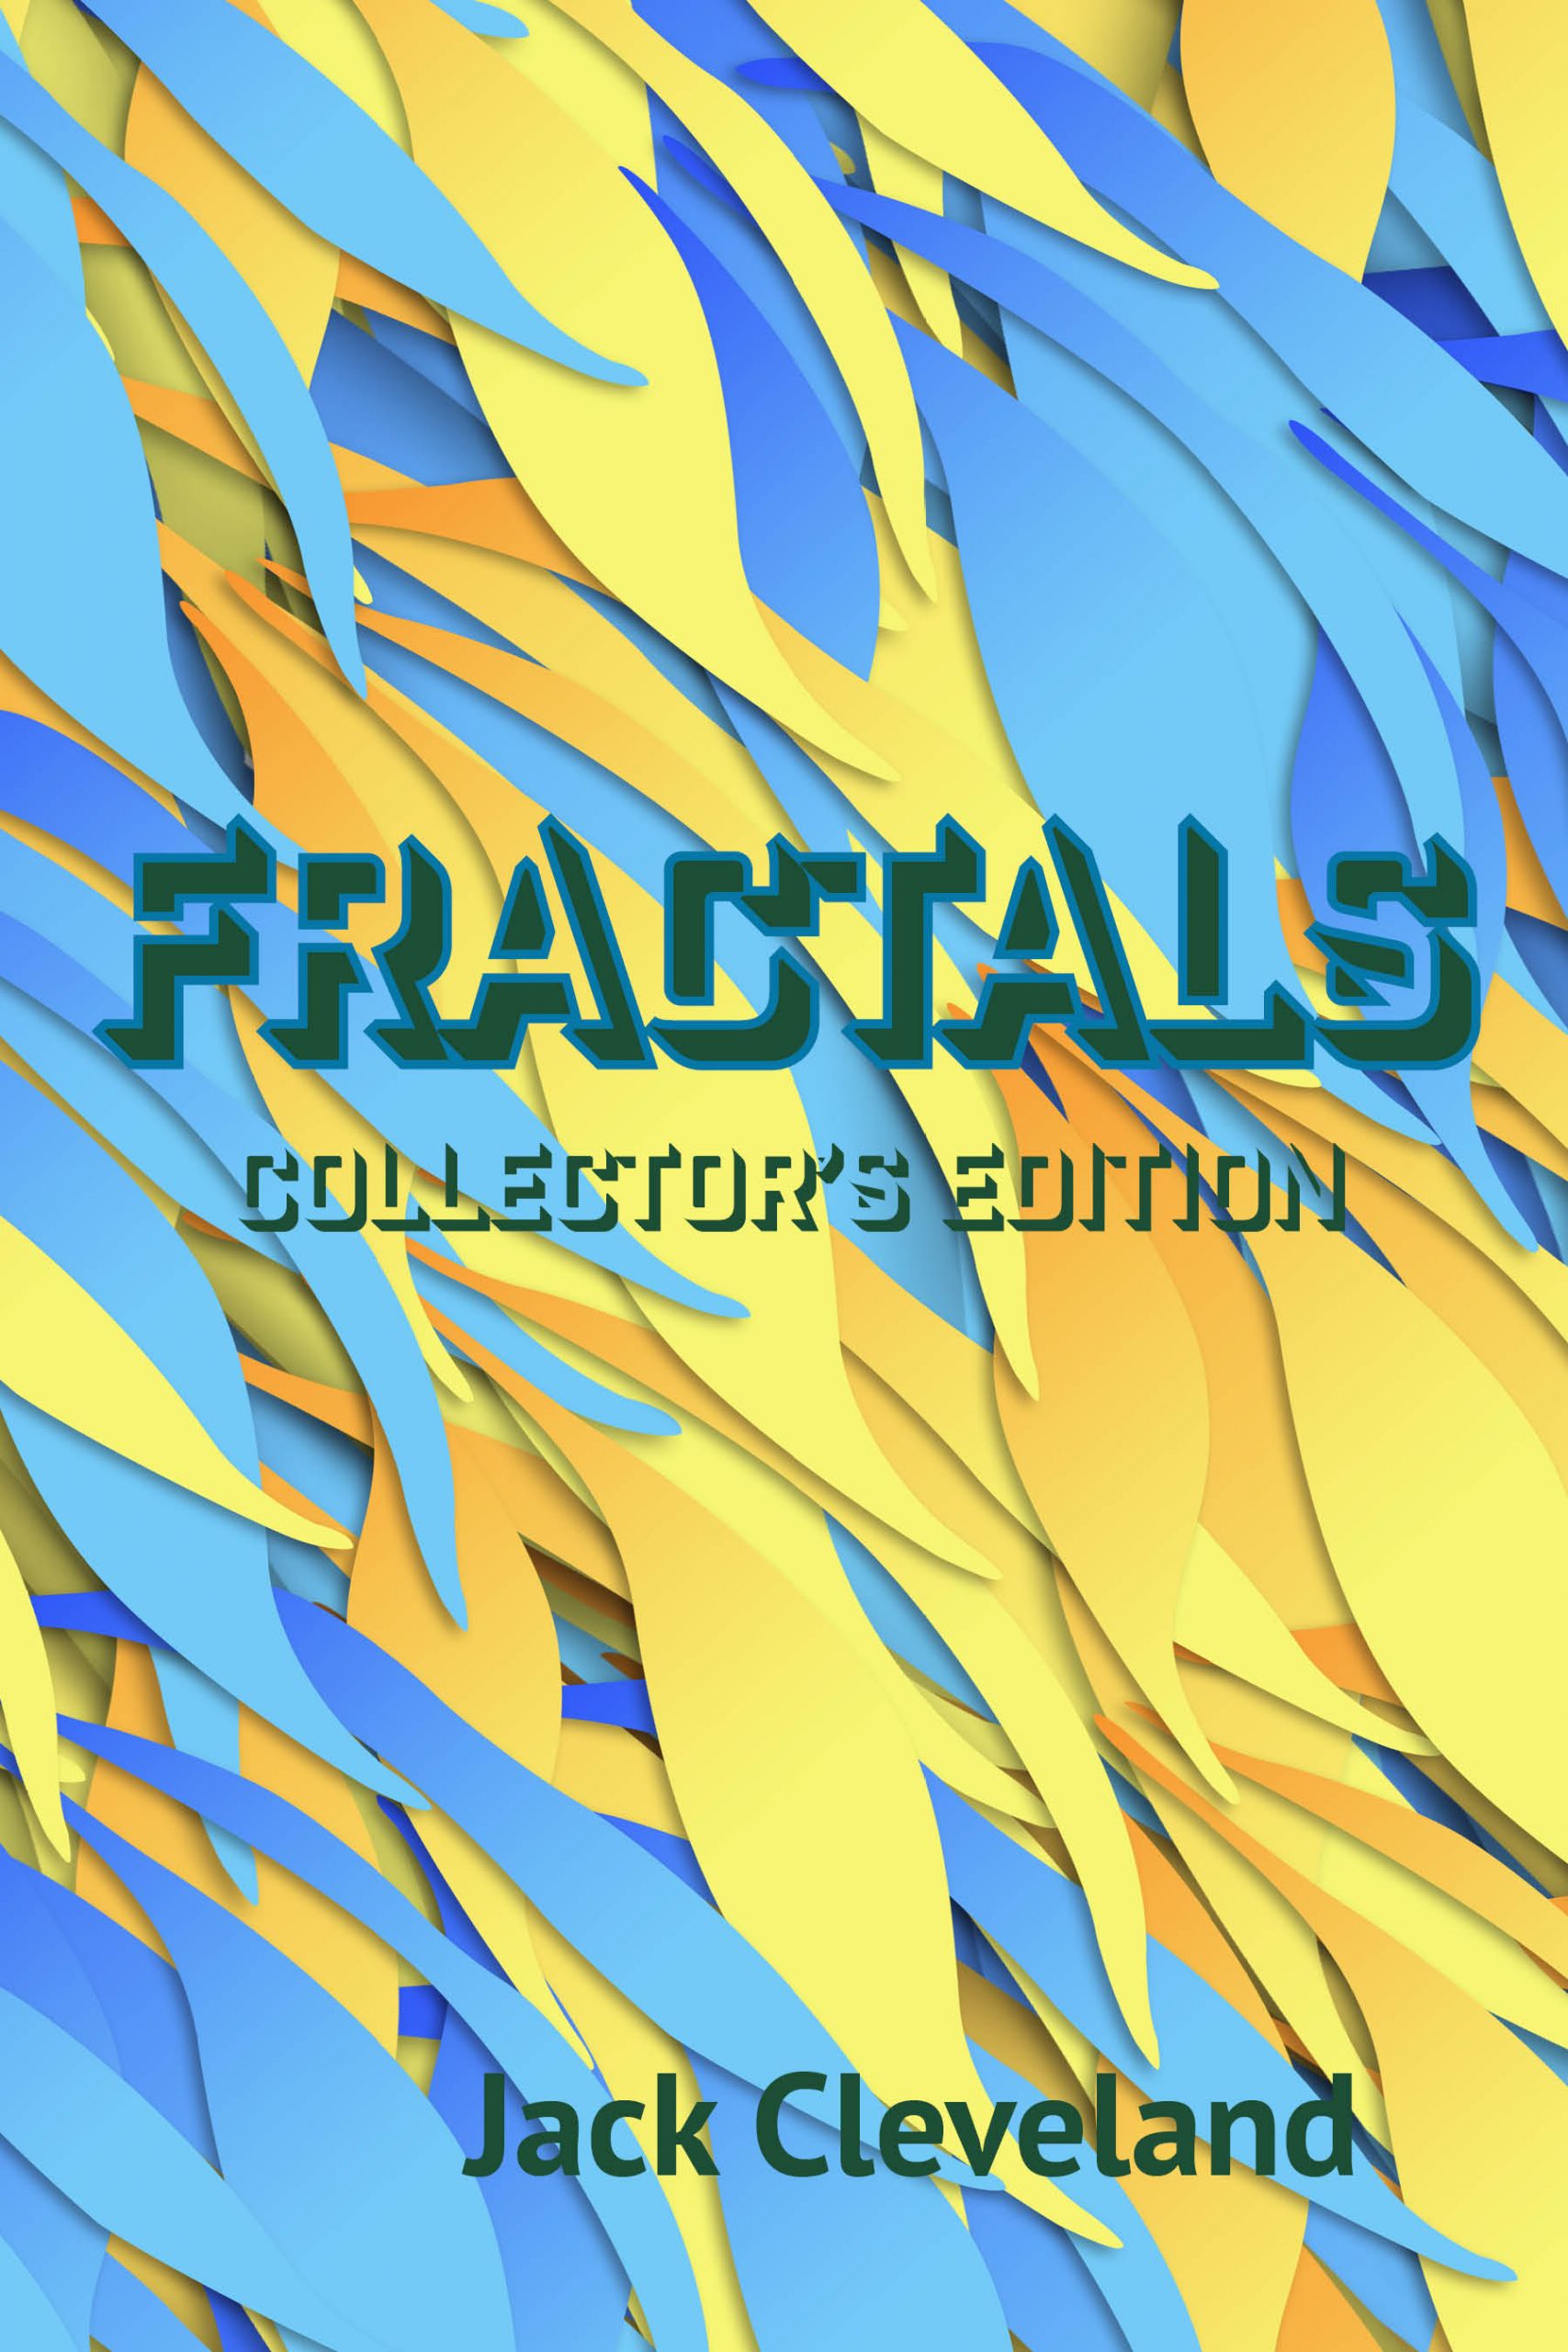 Collector'sEditionFractals